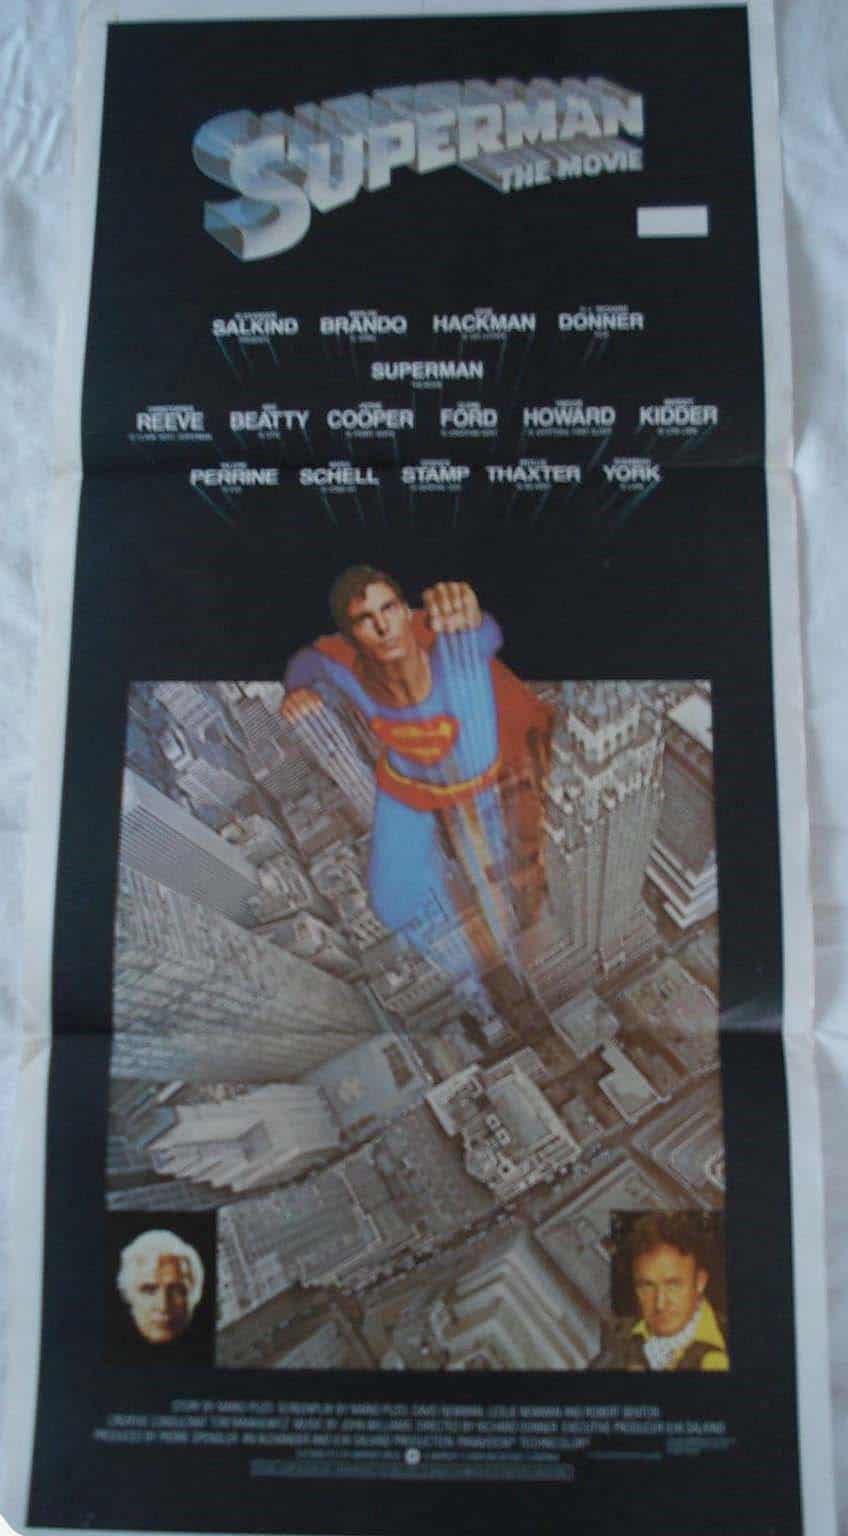 SUPERMAN THE MOVIE movie poster